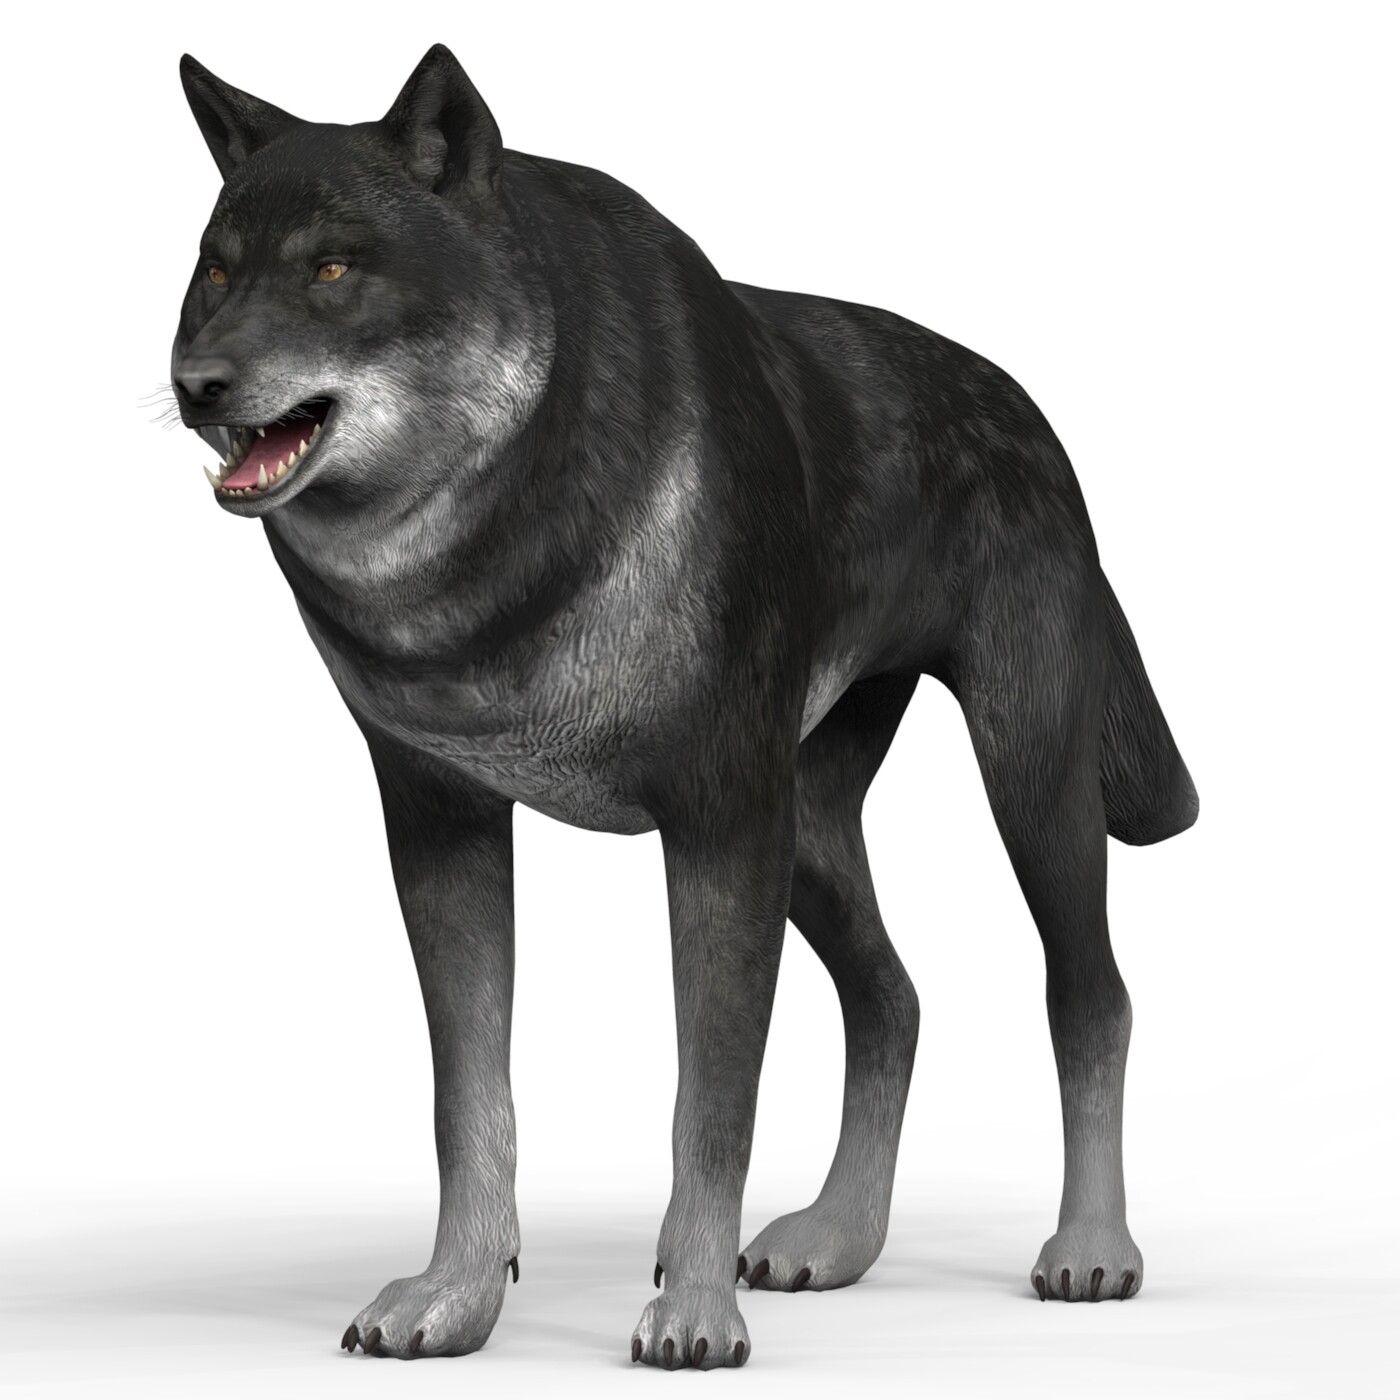 Wolf models. Волк 3д модель. Волк 3d модель. Волк STL модель. Вороной 3d модель волка.